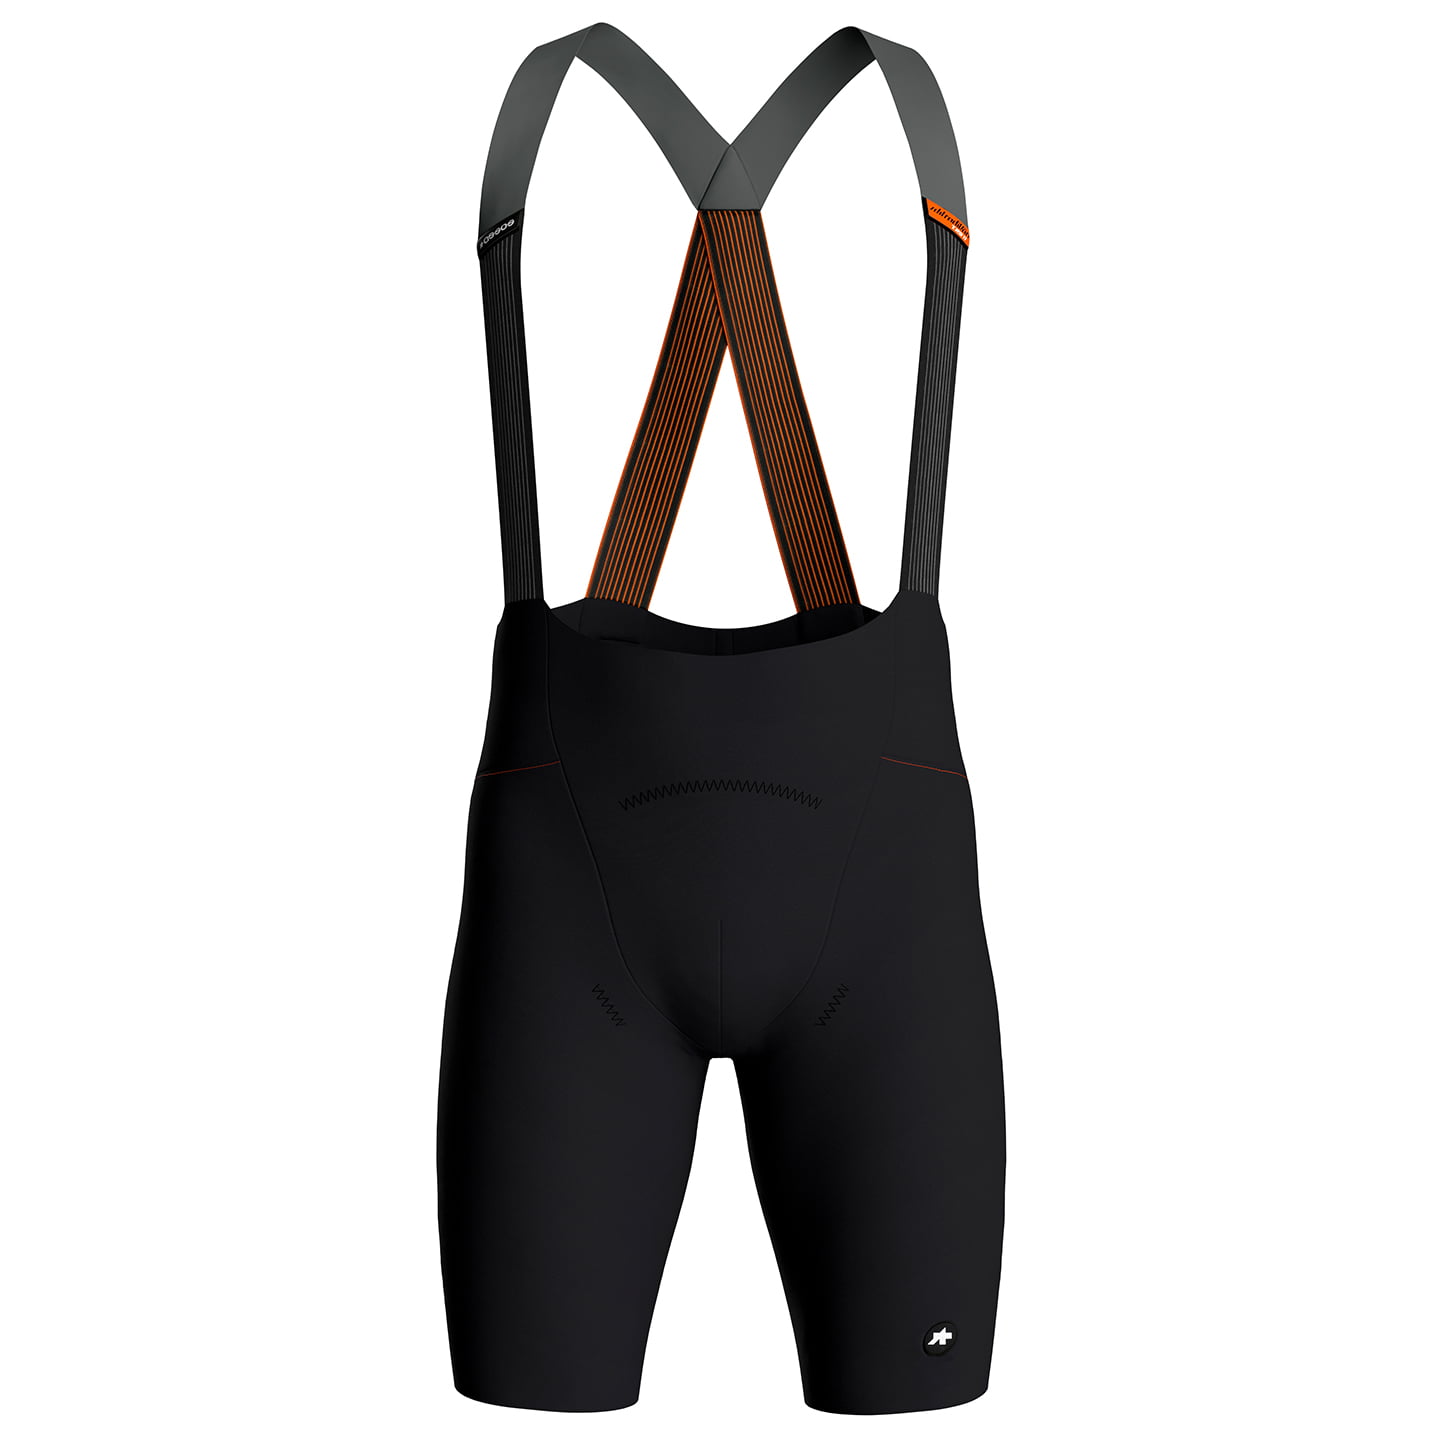 ASSOS Equipe RSR S11 Bib Shorts, for men, size 2XL, Cycle shorts, Cycling clothing